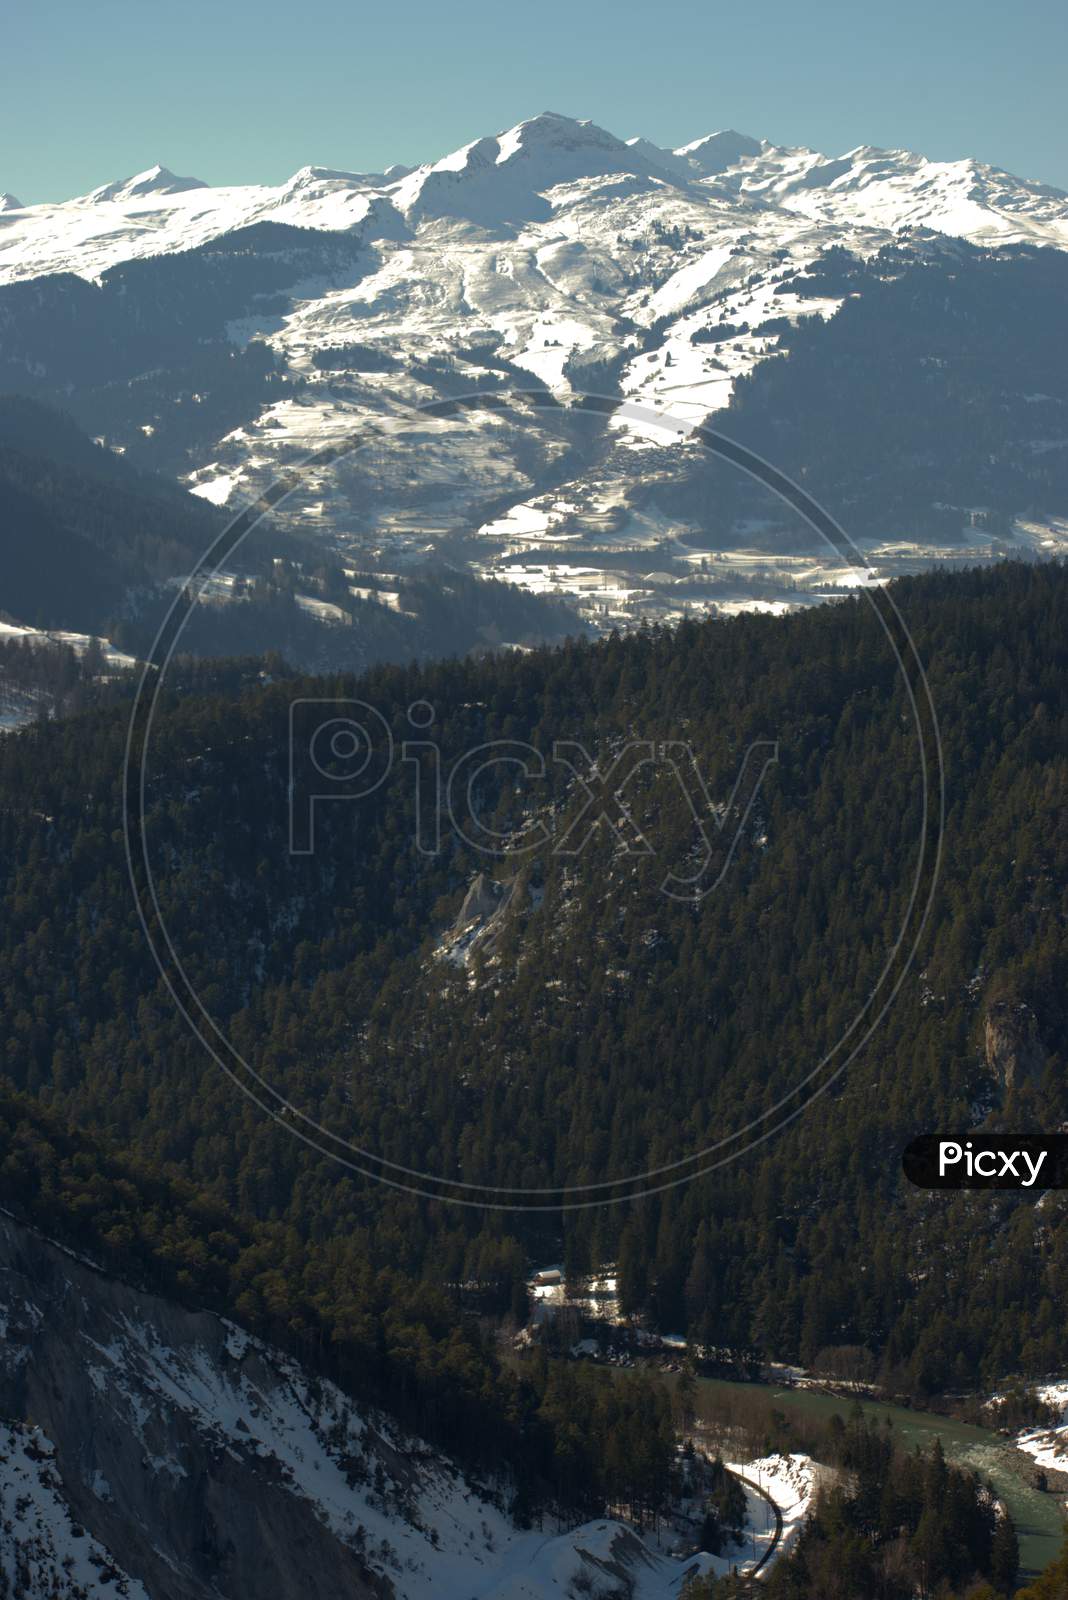 Alpine Winter Scenery At The Rhine Canyon Near Flims In Switzerland 20.2.2021